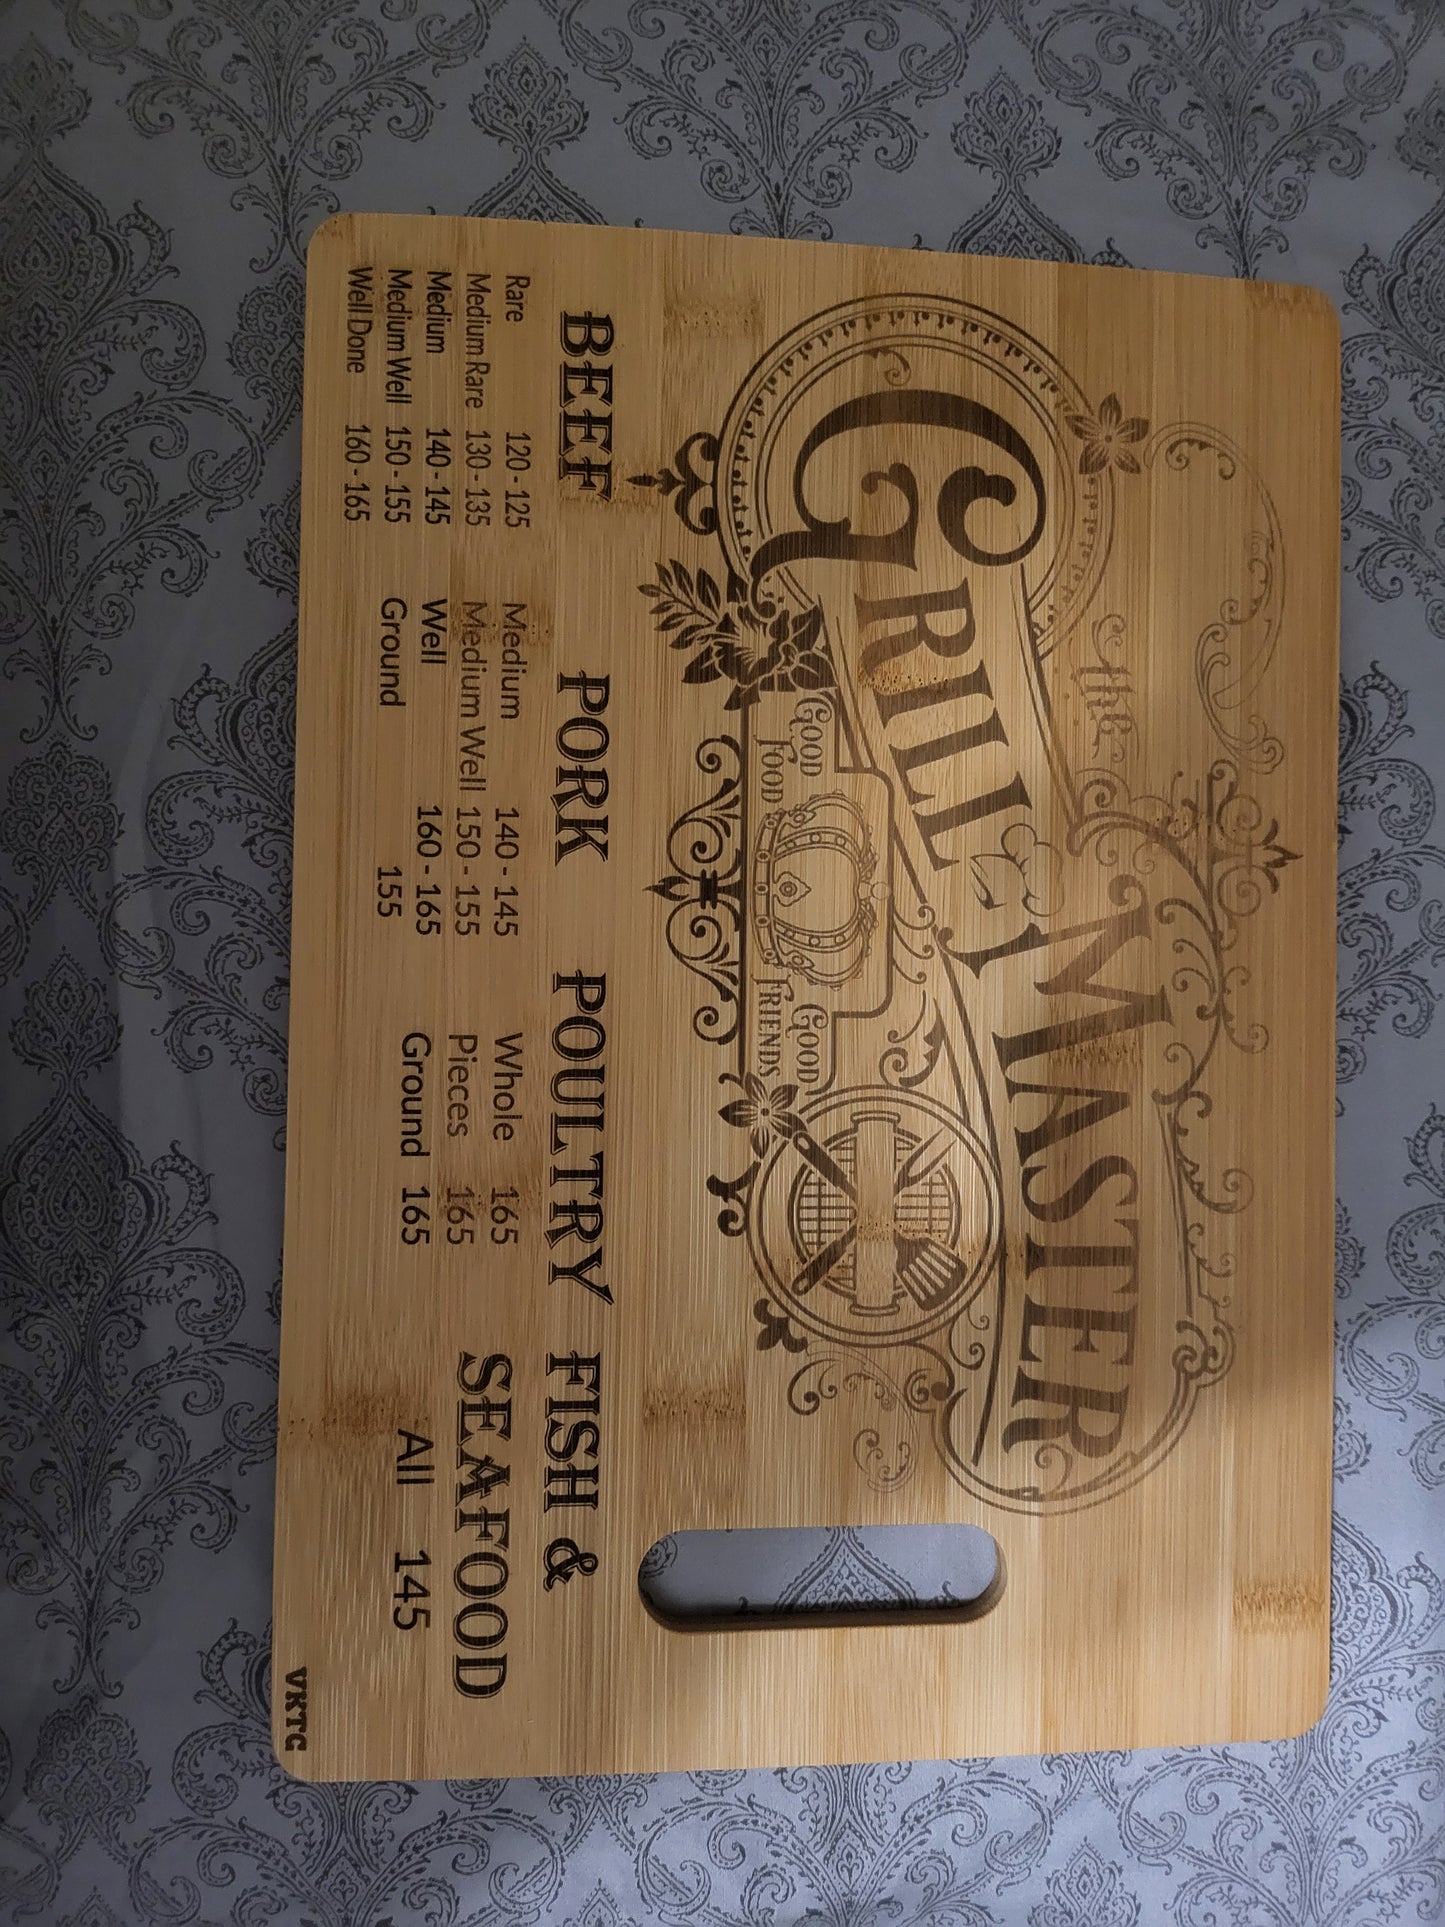 Full size cutting board